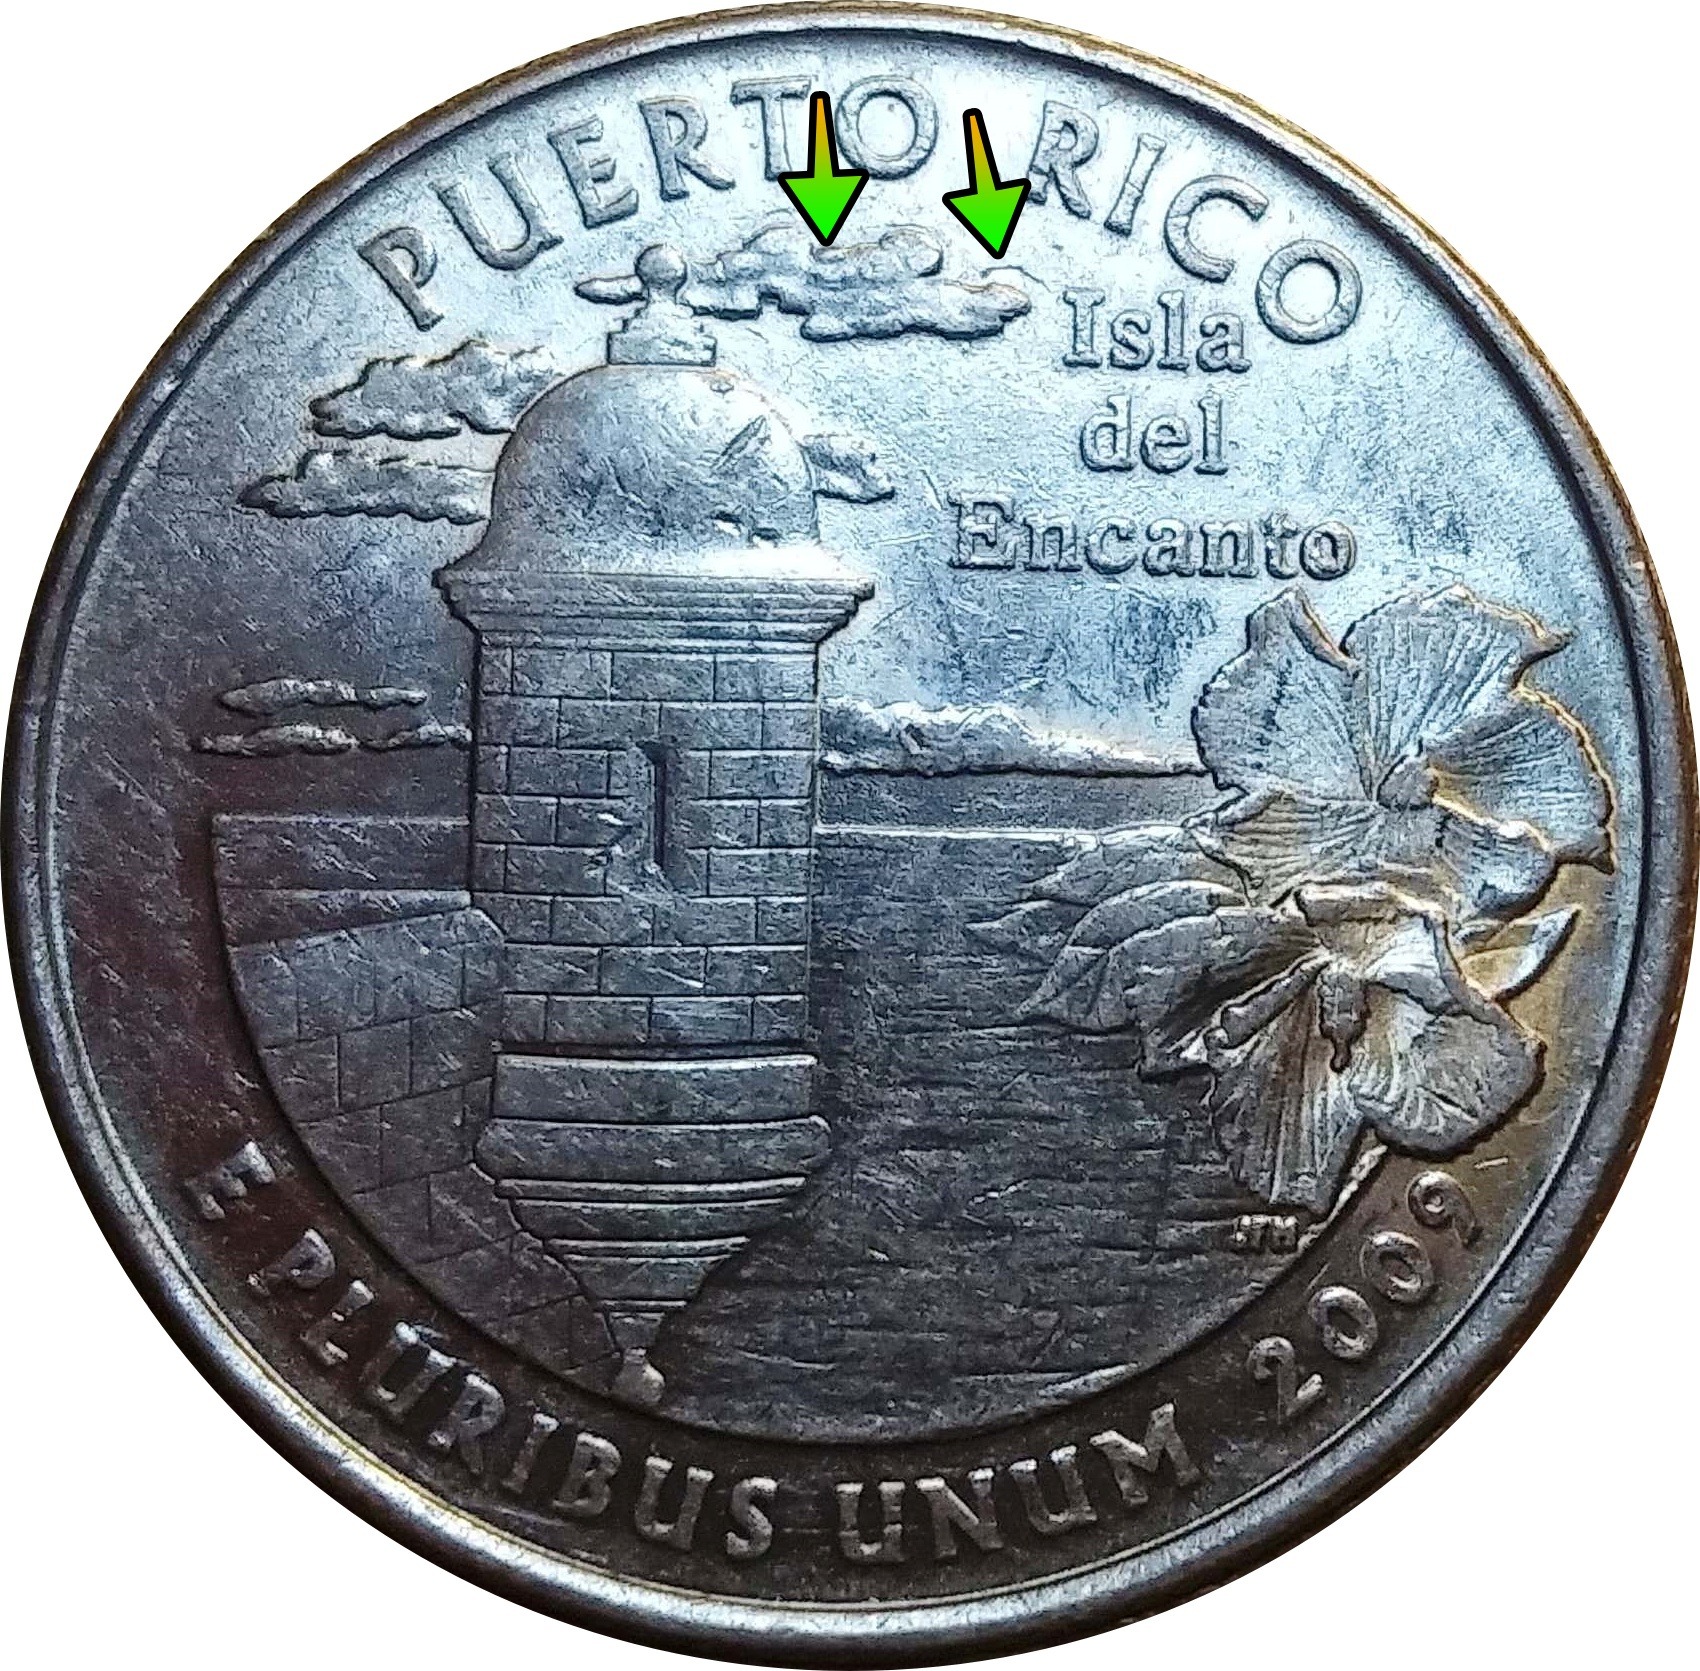 BU Quarter Roll from Mint Sewn Bag 2009-P Puerto Rico 